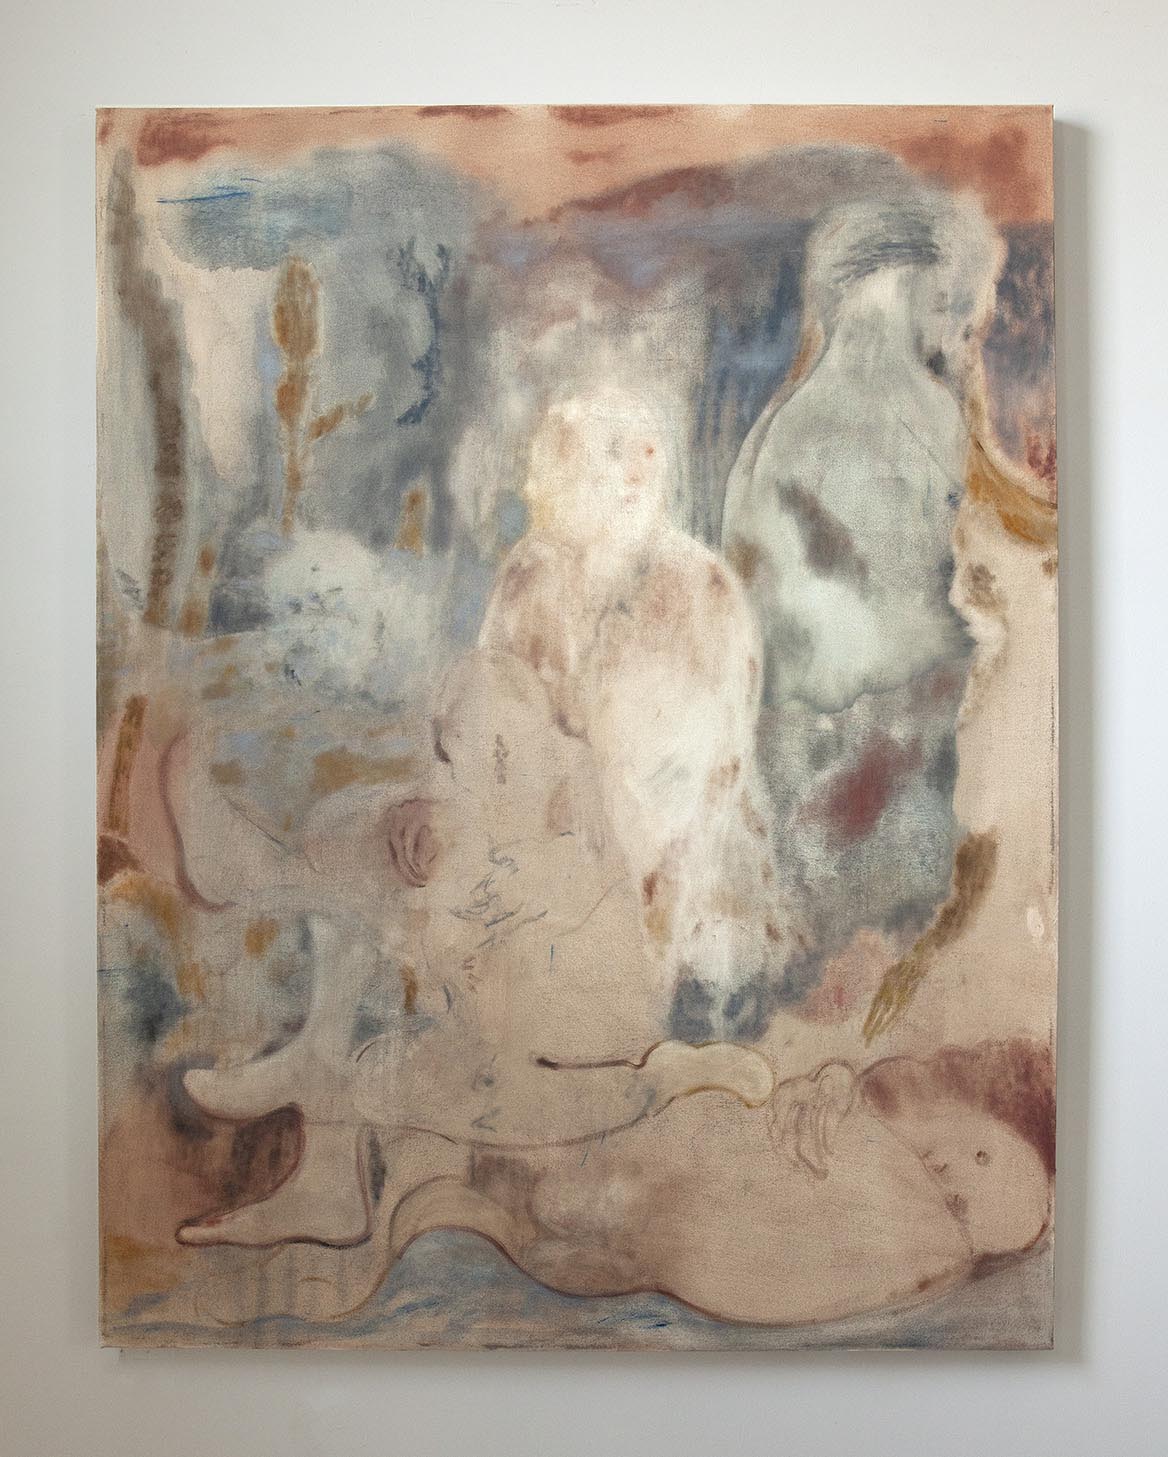 Sleep Seekers, oil on canvas, 64x48 in, 2019